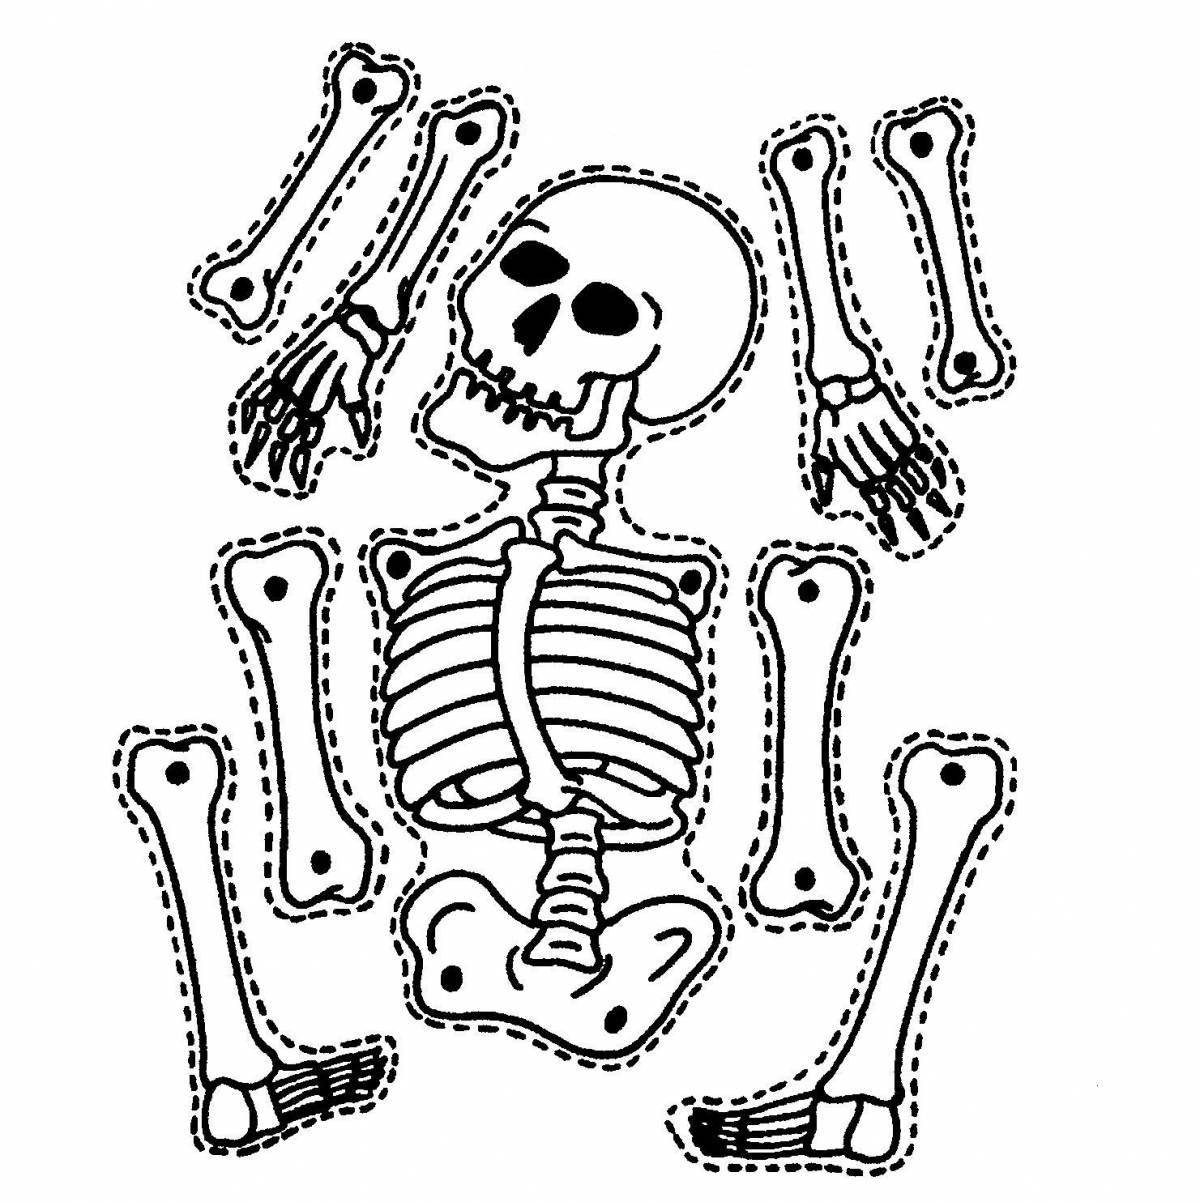 Nerving skeleton coloring page